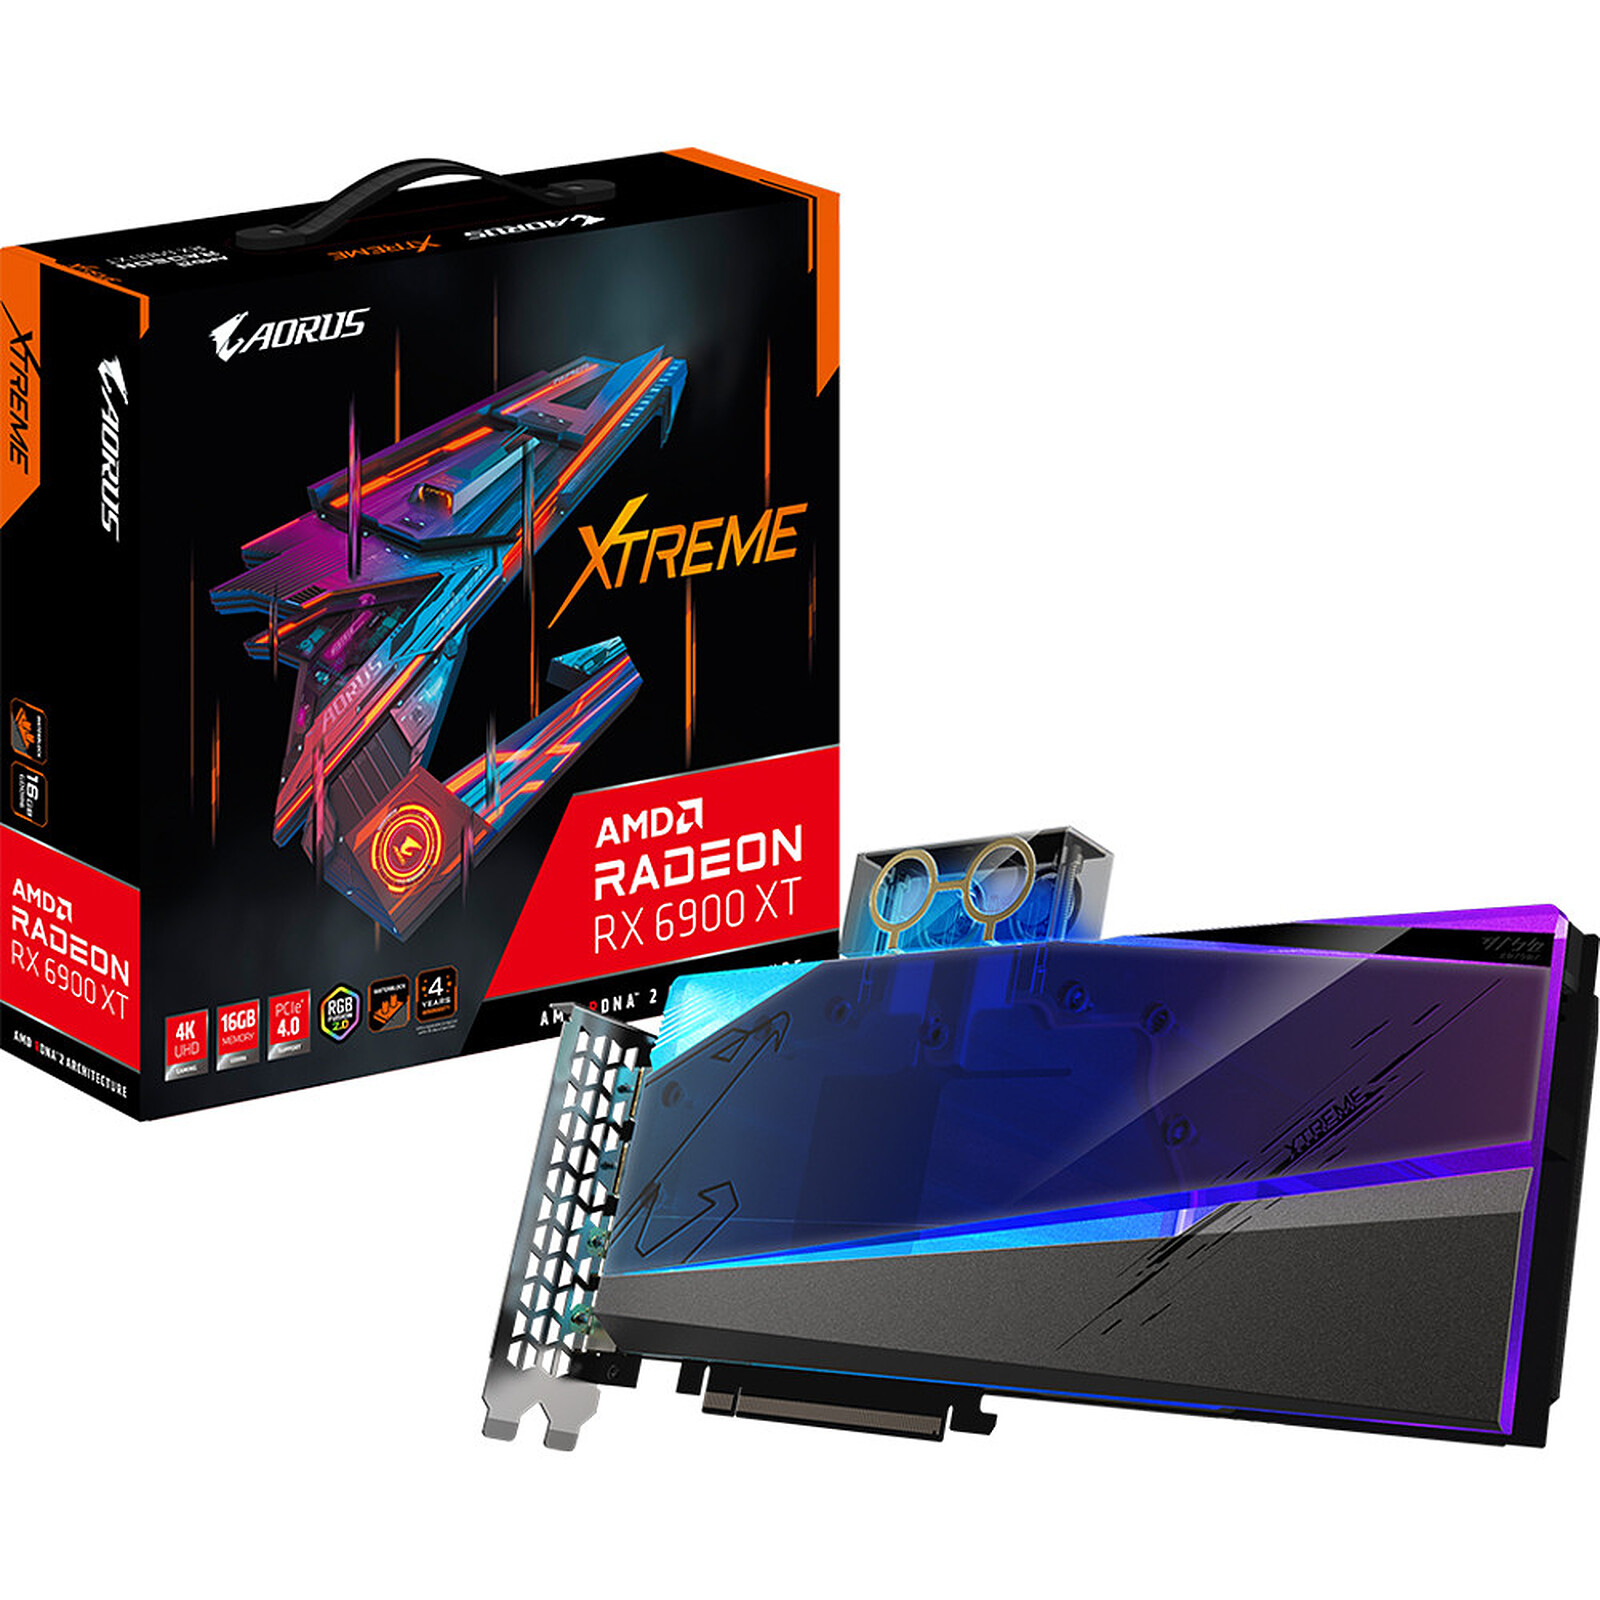 Sapphire TOXIC Radeon RX 6900 XT Extreme Edition - Graphics card - LDLC  3-year warranty